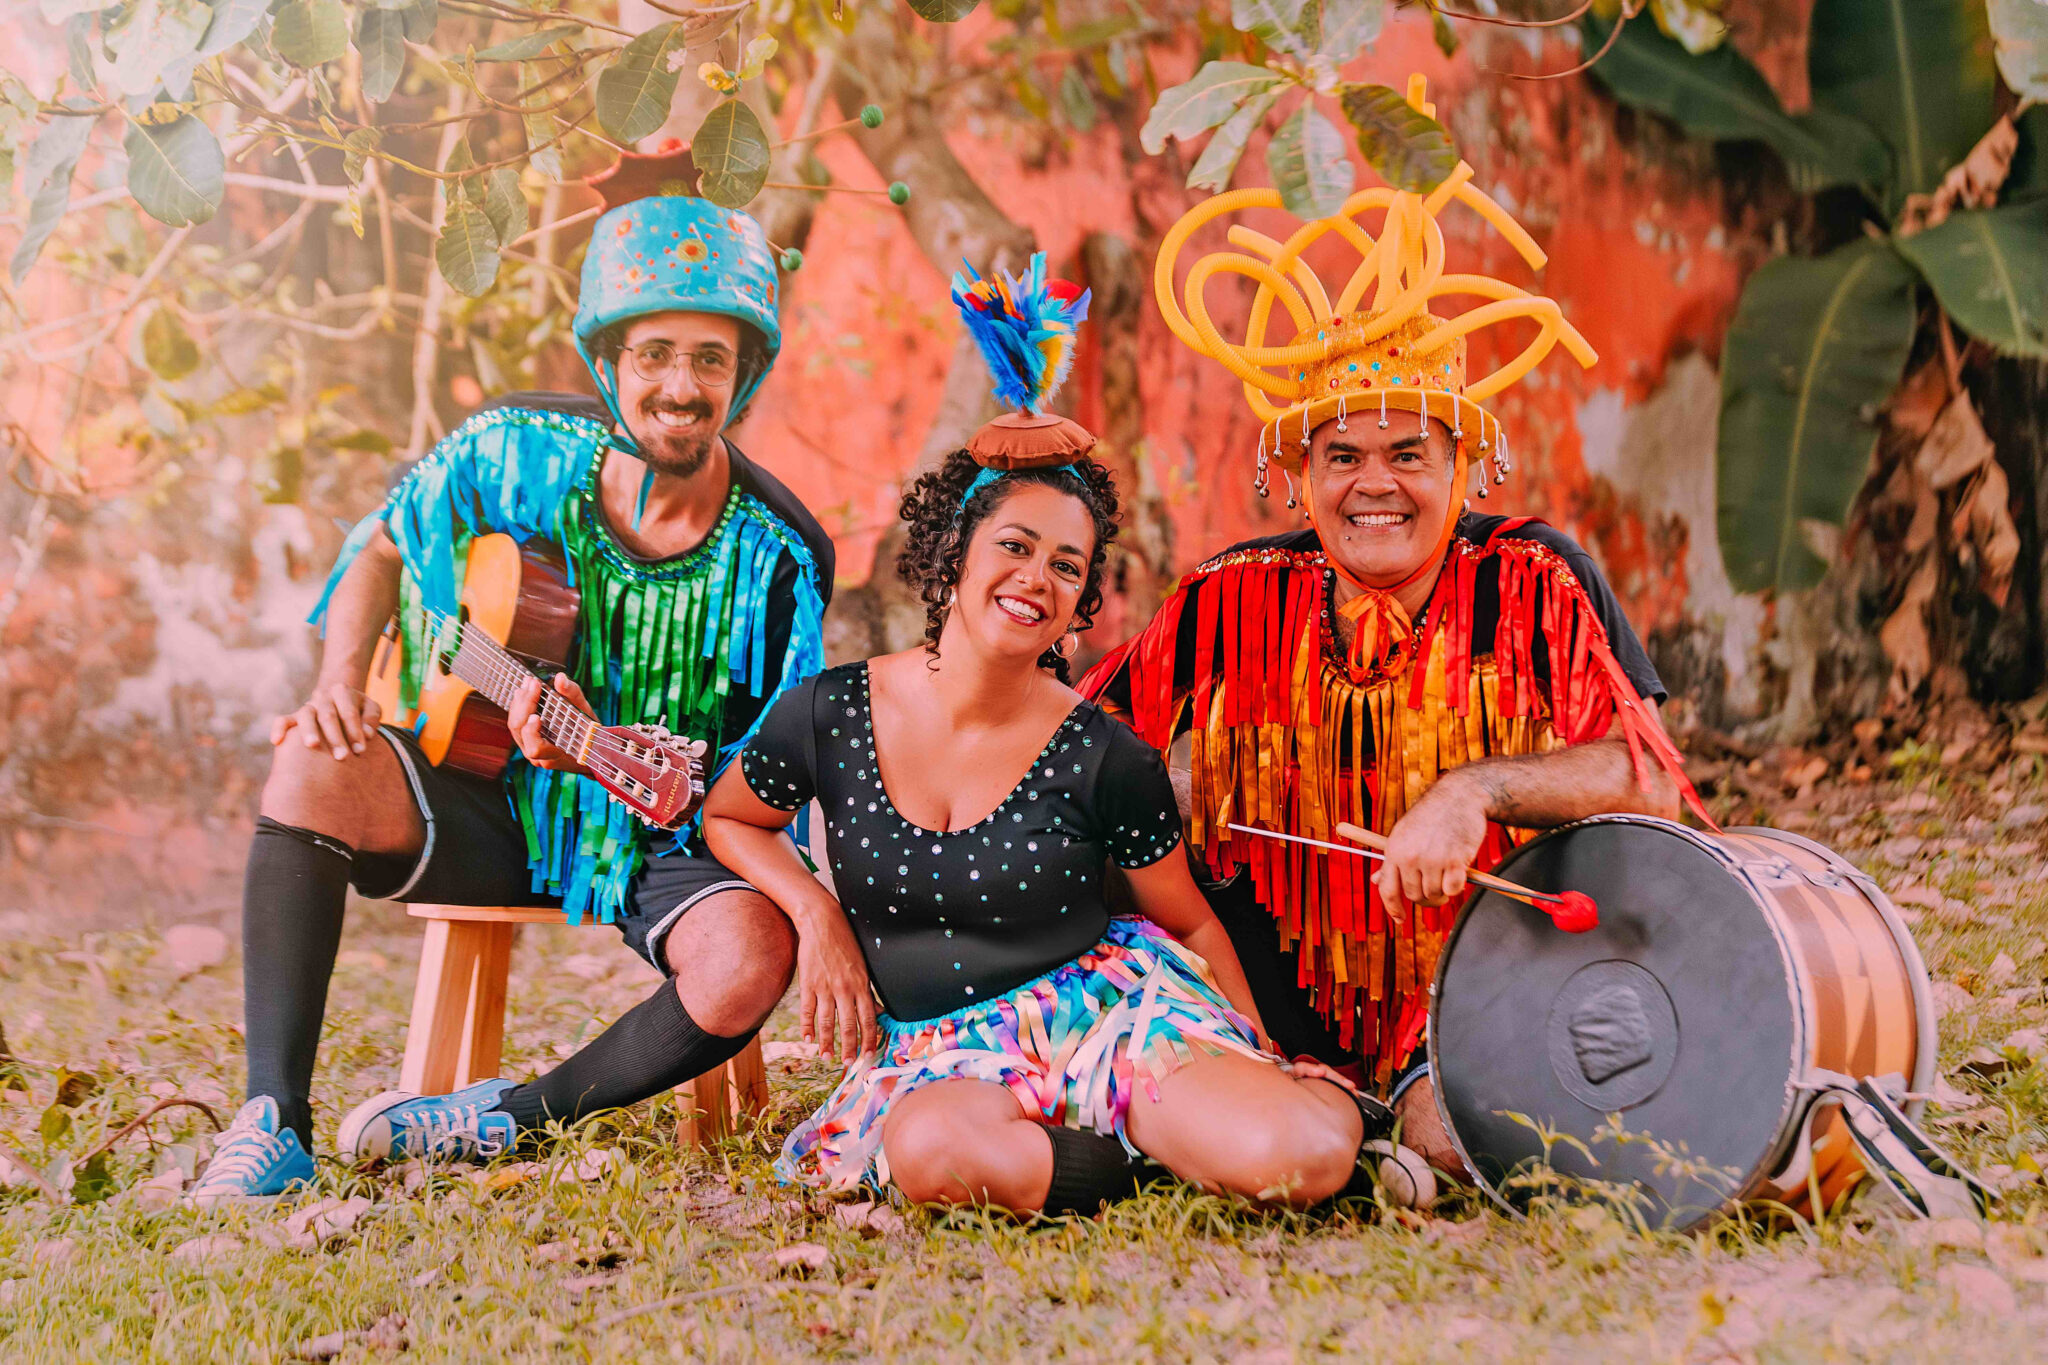 Musical infantil apresenta o nordeste na CAIXA Cultural – gratuito